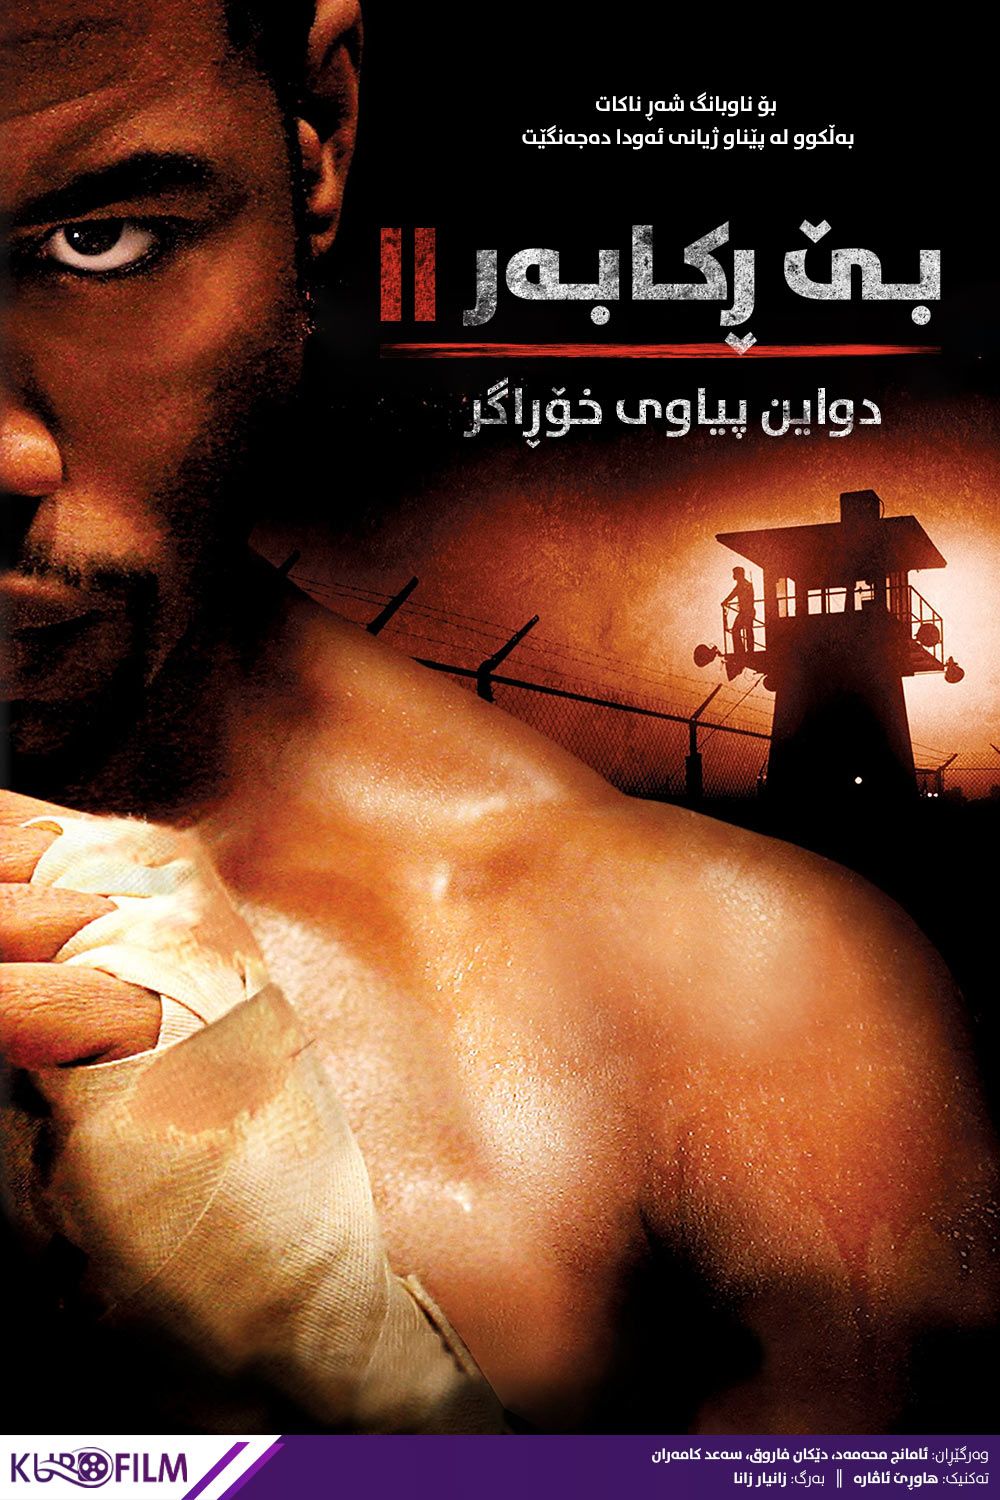 Undisputed 2 (2006)